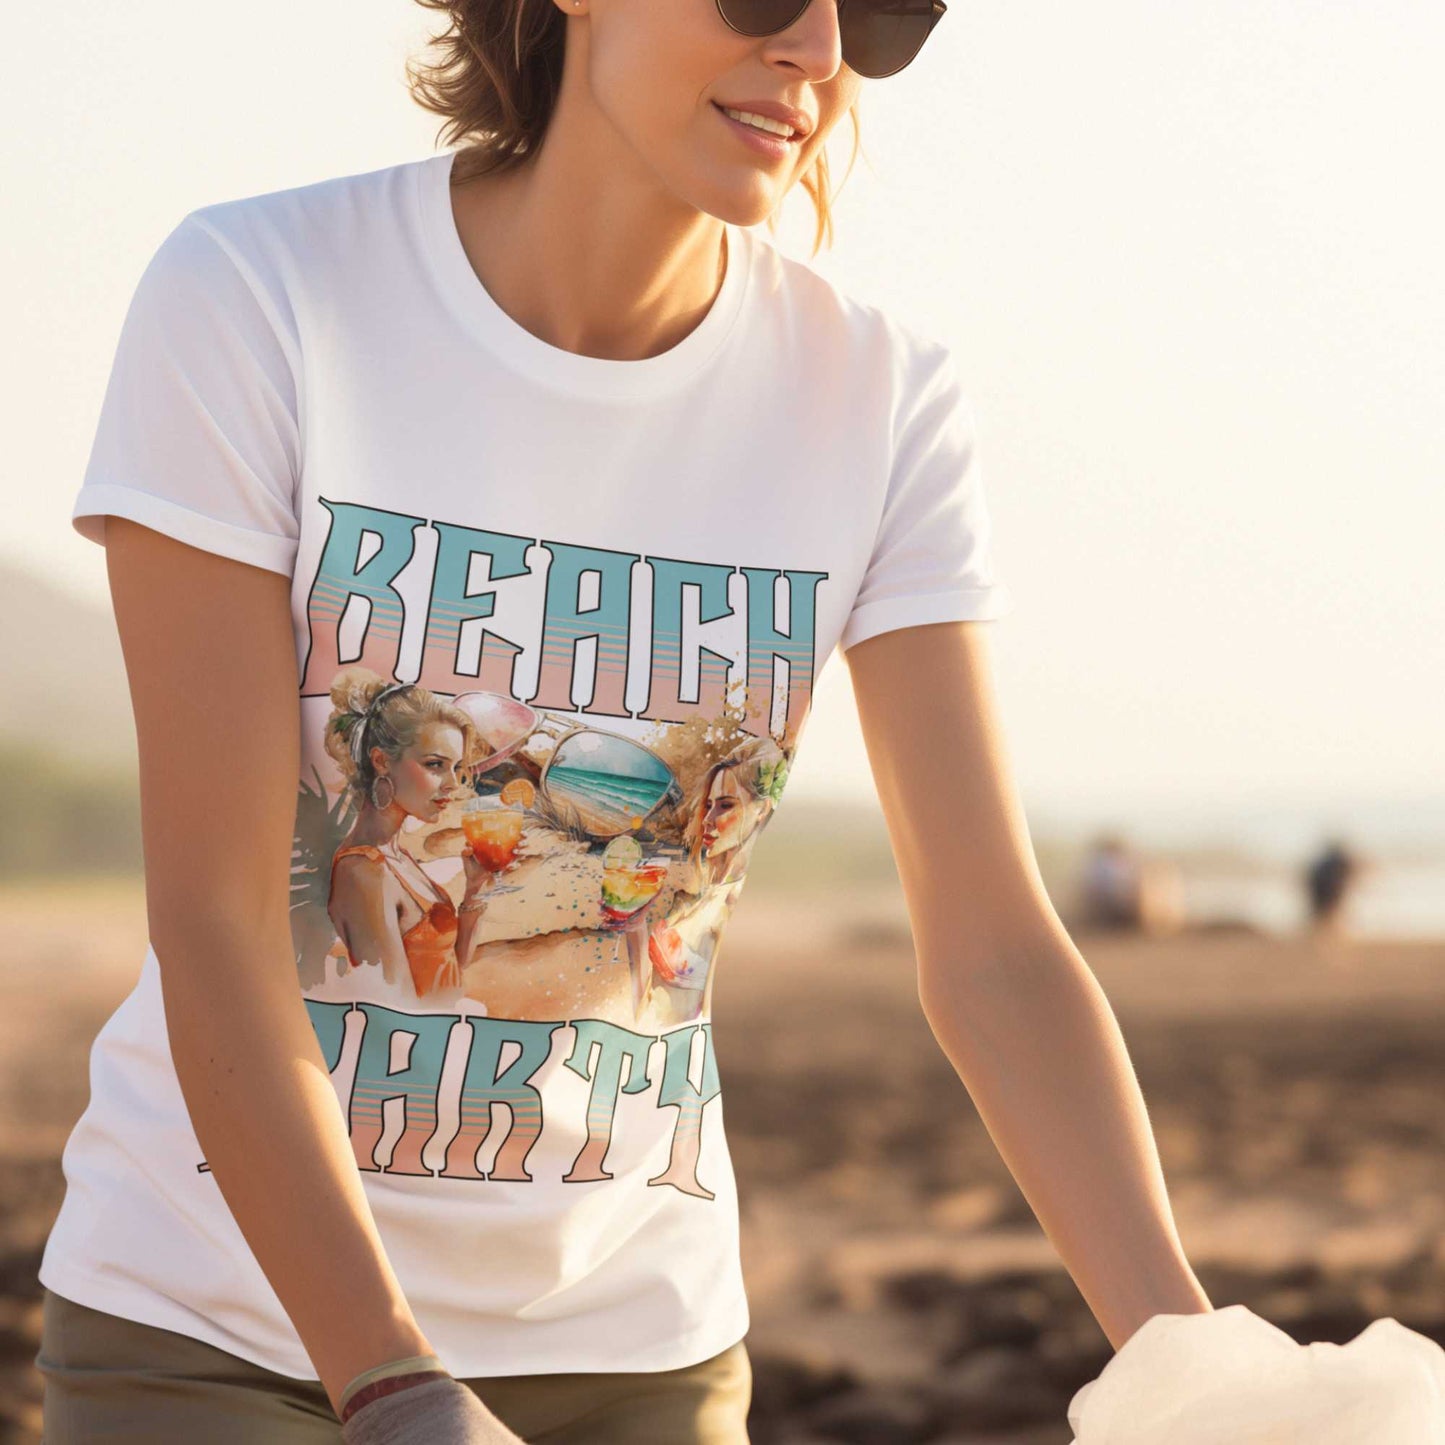 Vibrant Beach Party Tee - Celebrate Summer Vibes, 100% Cotton, S-5XL Heavy Cotton T-Shirt trans beach party (1)